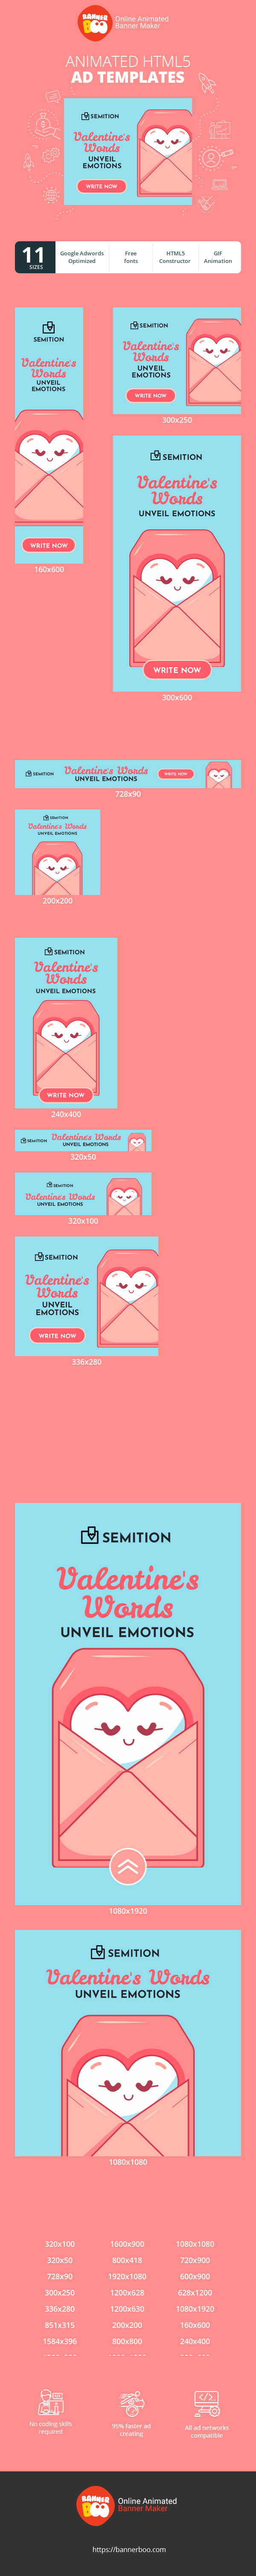 Шаблон рекламного банера — Valentine's Words Unveil Emotions — Valentine's Day